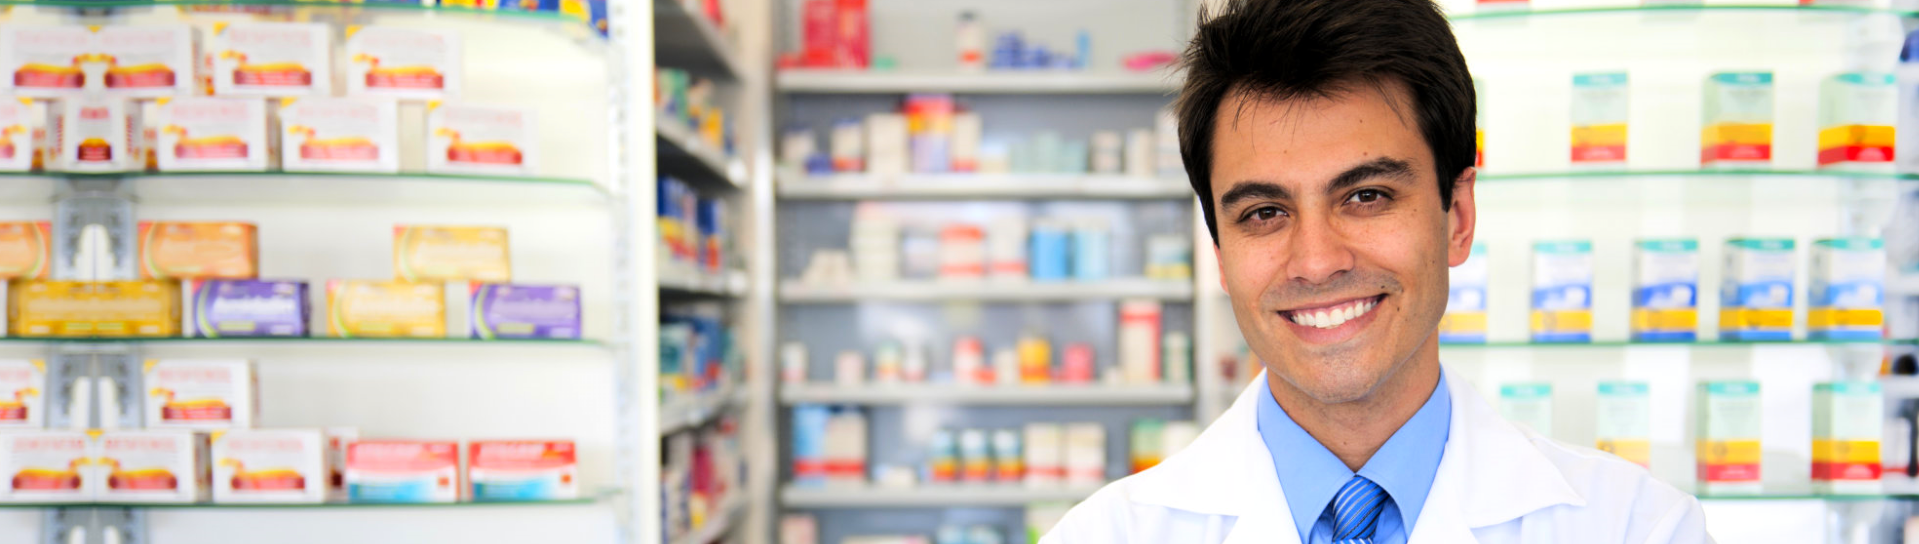 a pharmacist man